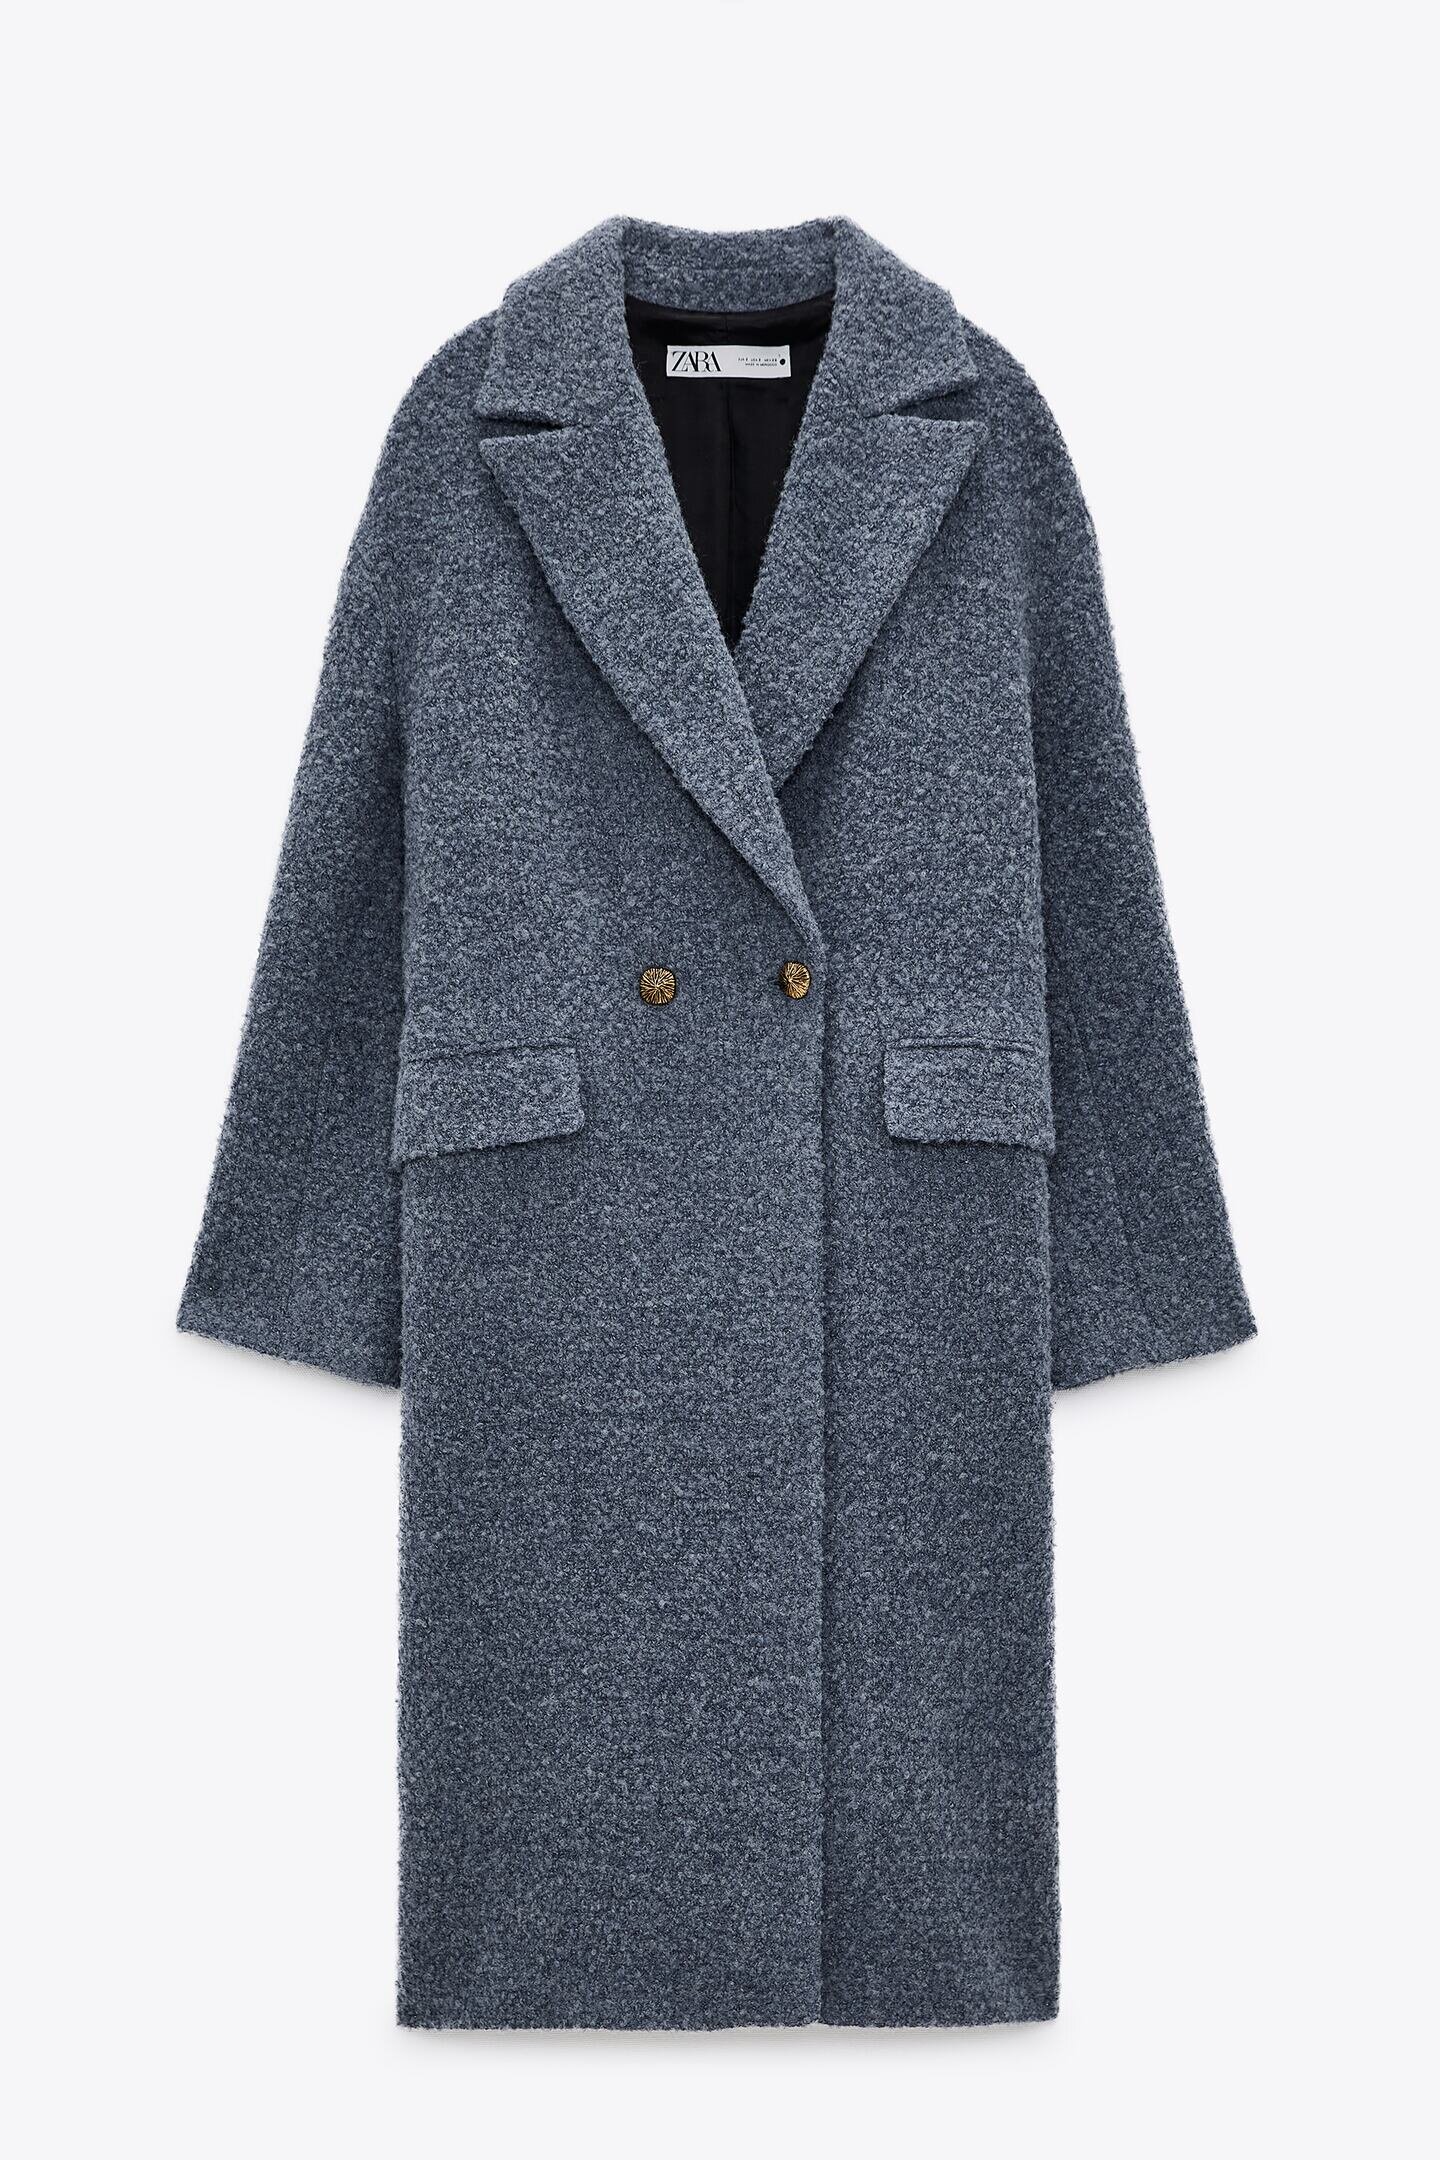 Zara Textured Coat in Faded Blue.jpg